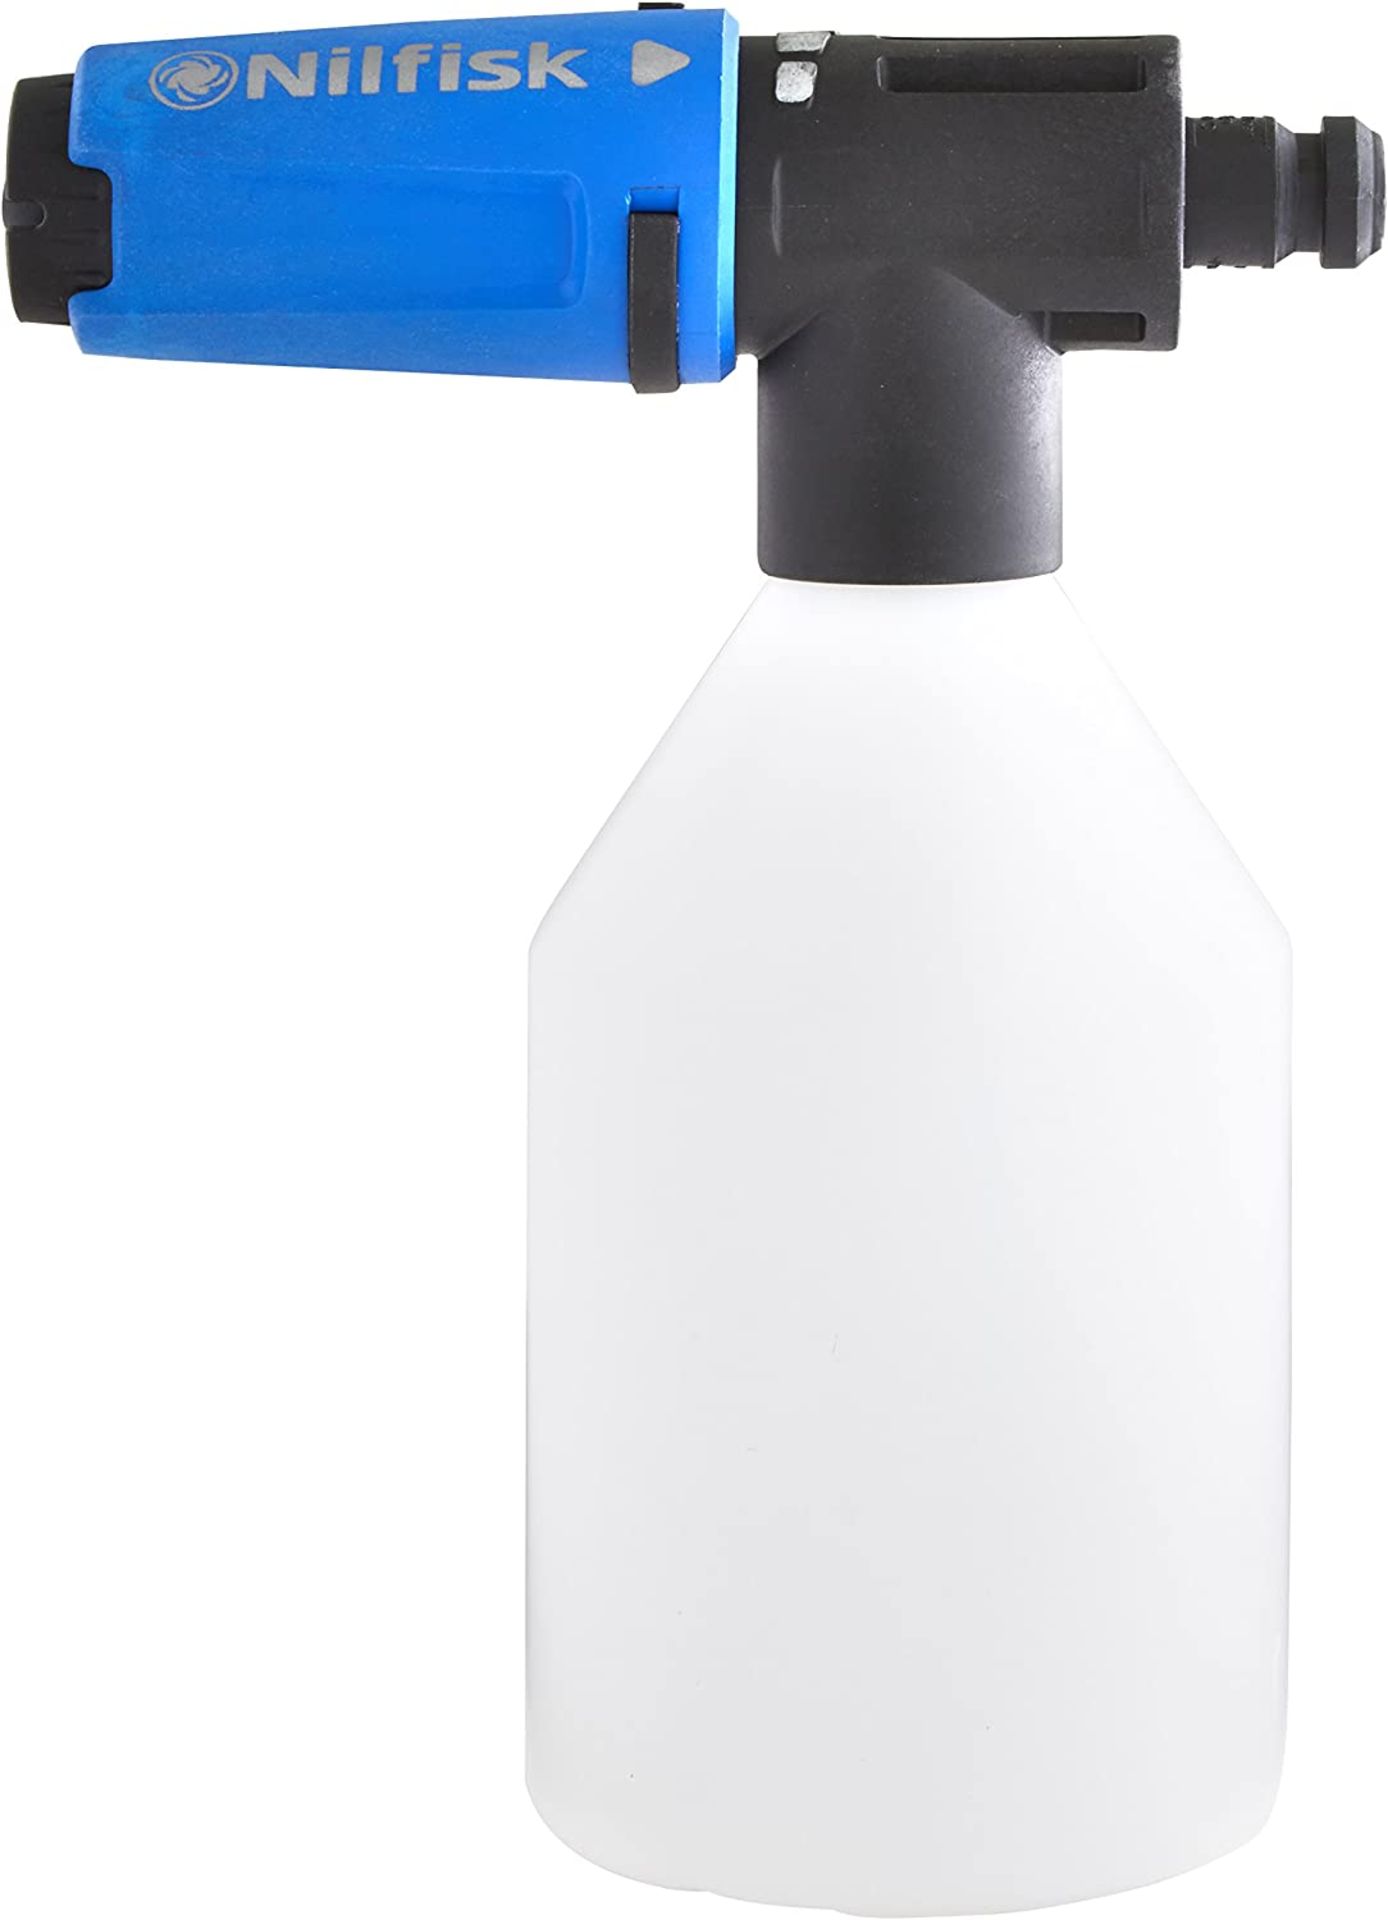 Nilfisk 128500938 Super Foam sprayer for pressure washer, Blue